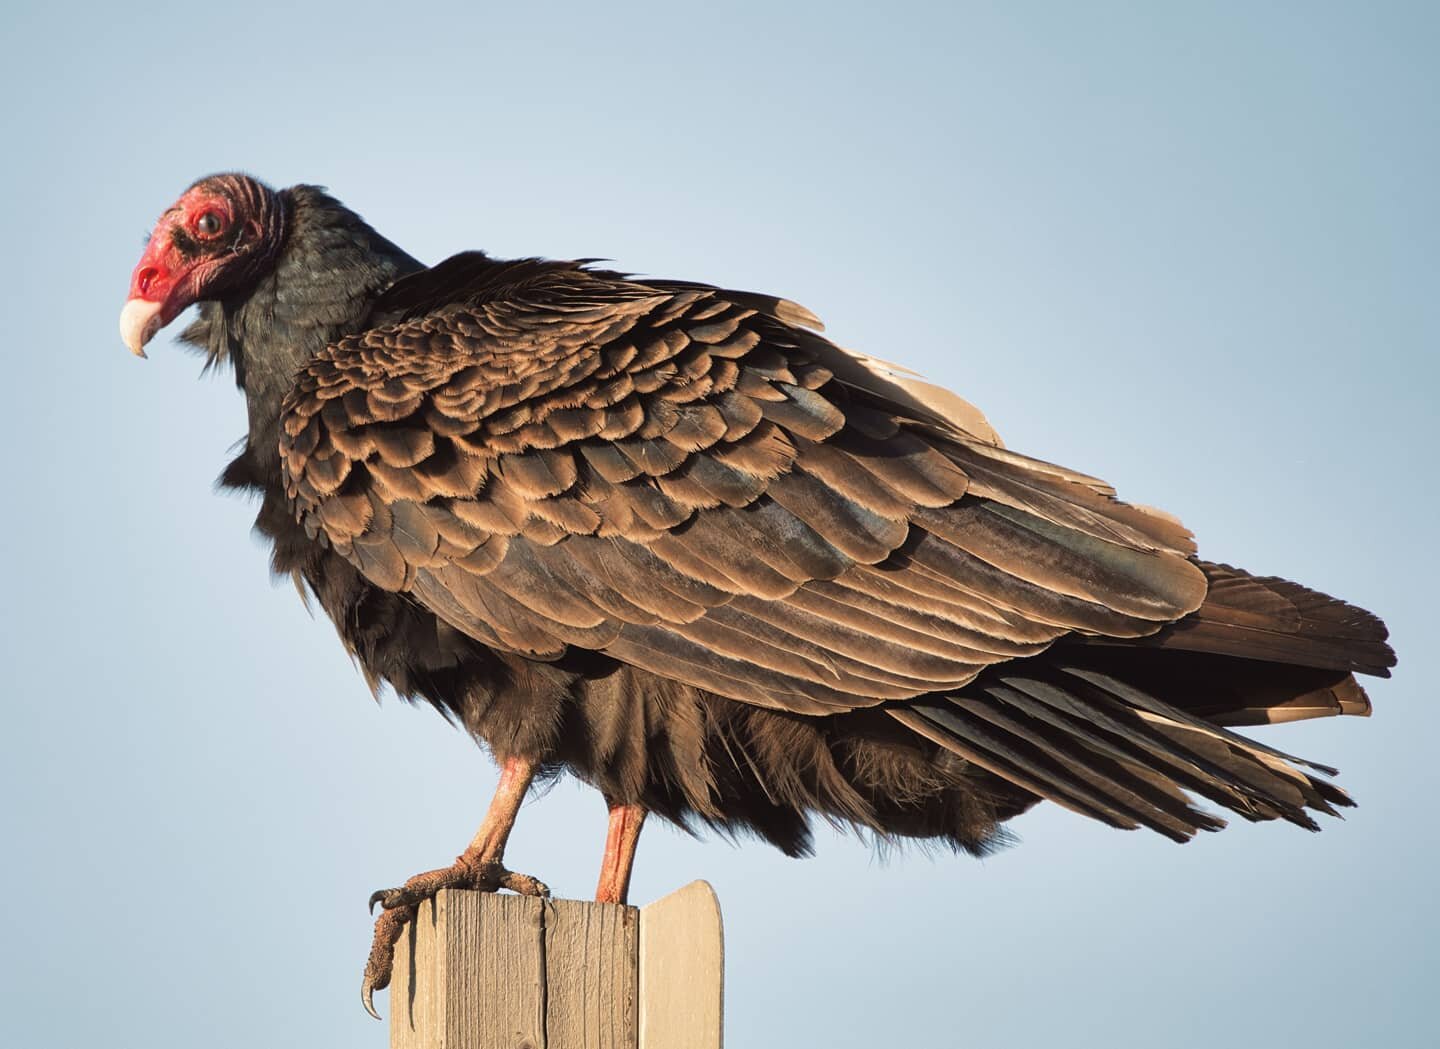 Saw a turkey vulture today #turkeyvulture #birdphotography #wildlife